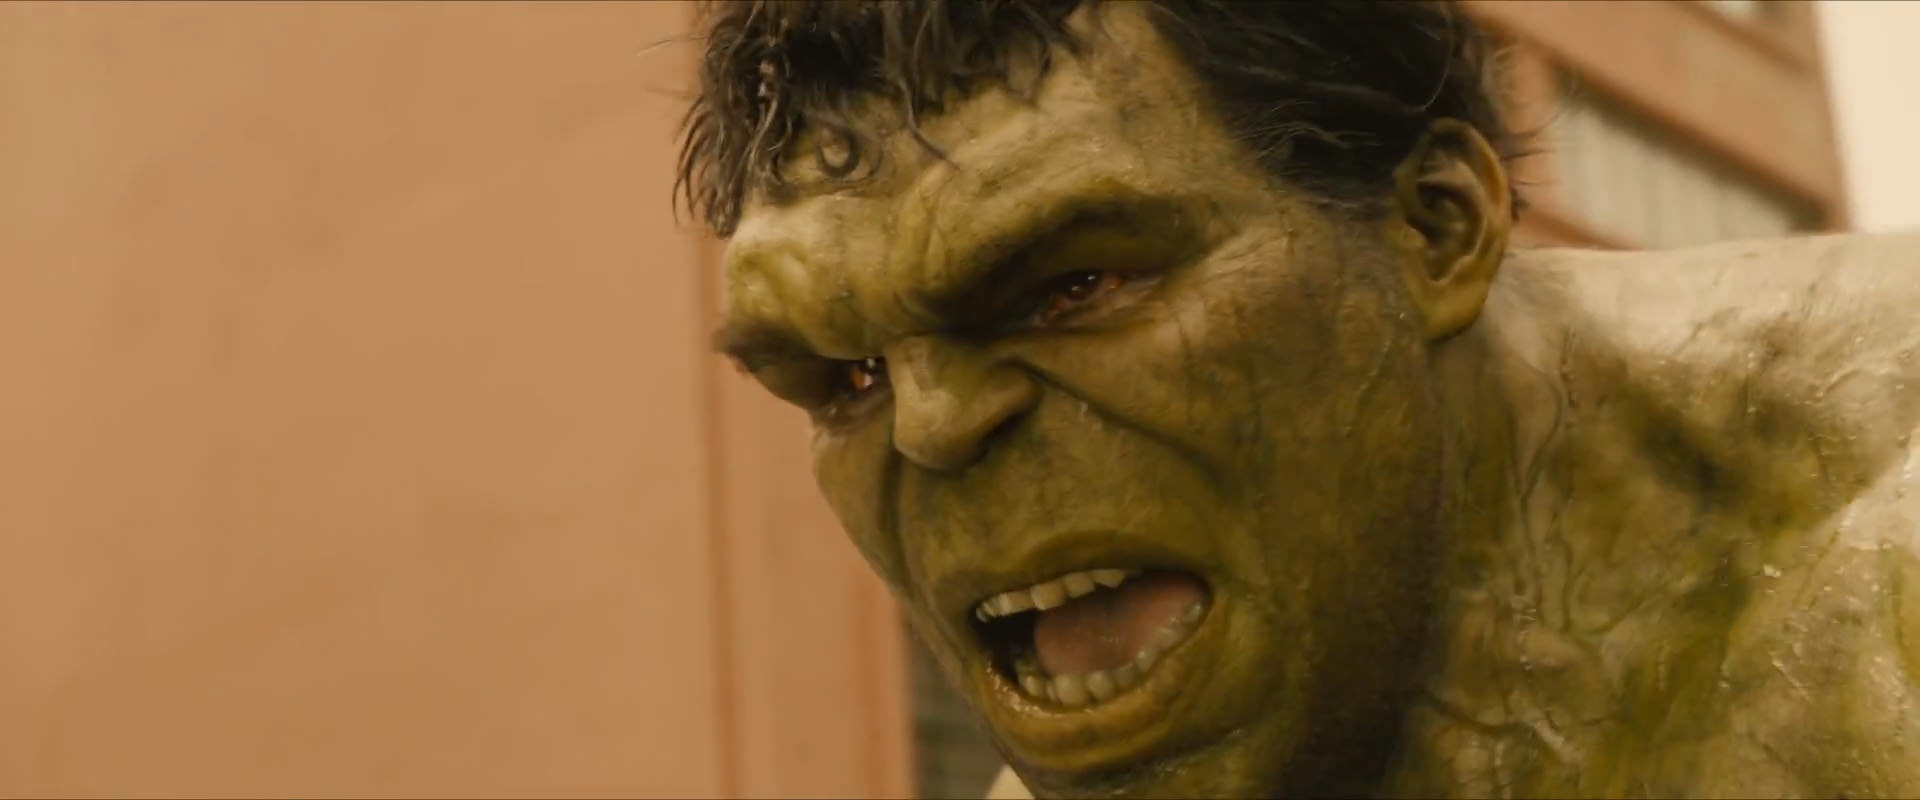 Avengers-Age-of-Ultron-Trailer-1-Hulk-Upset